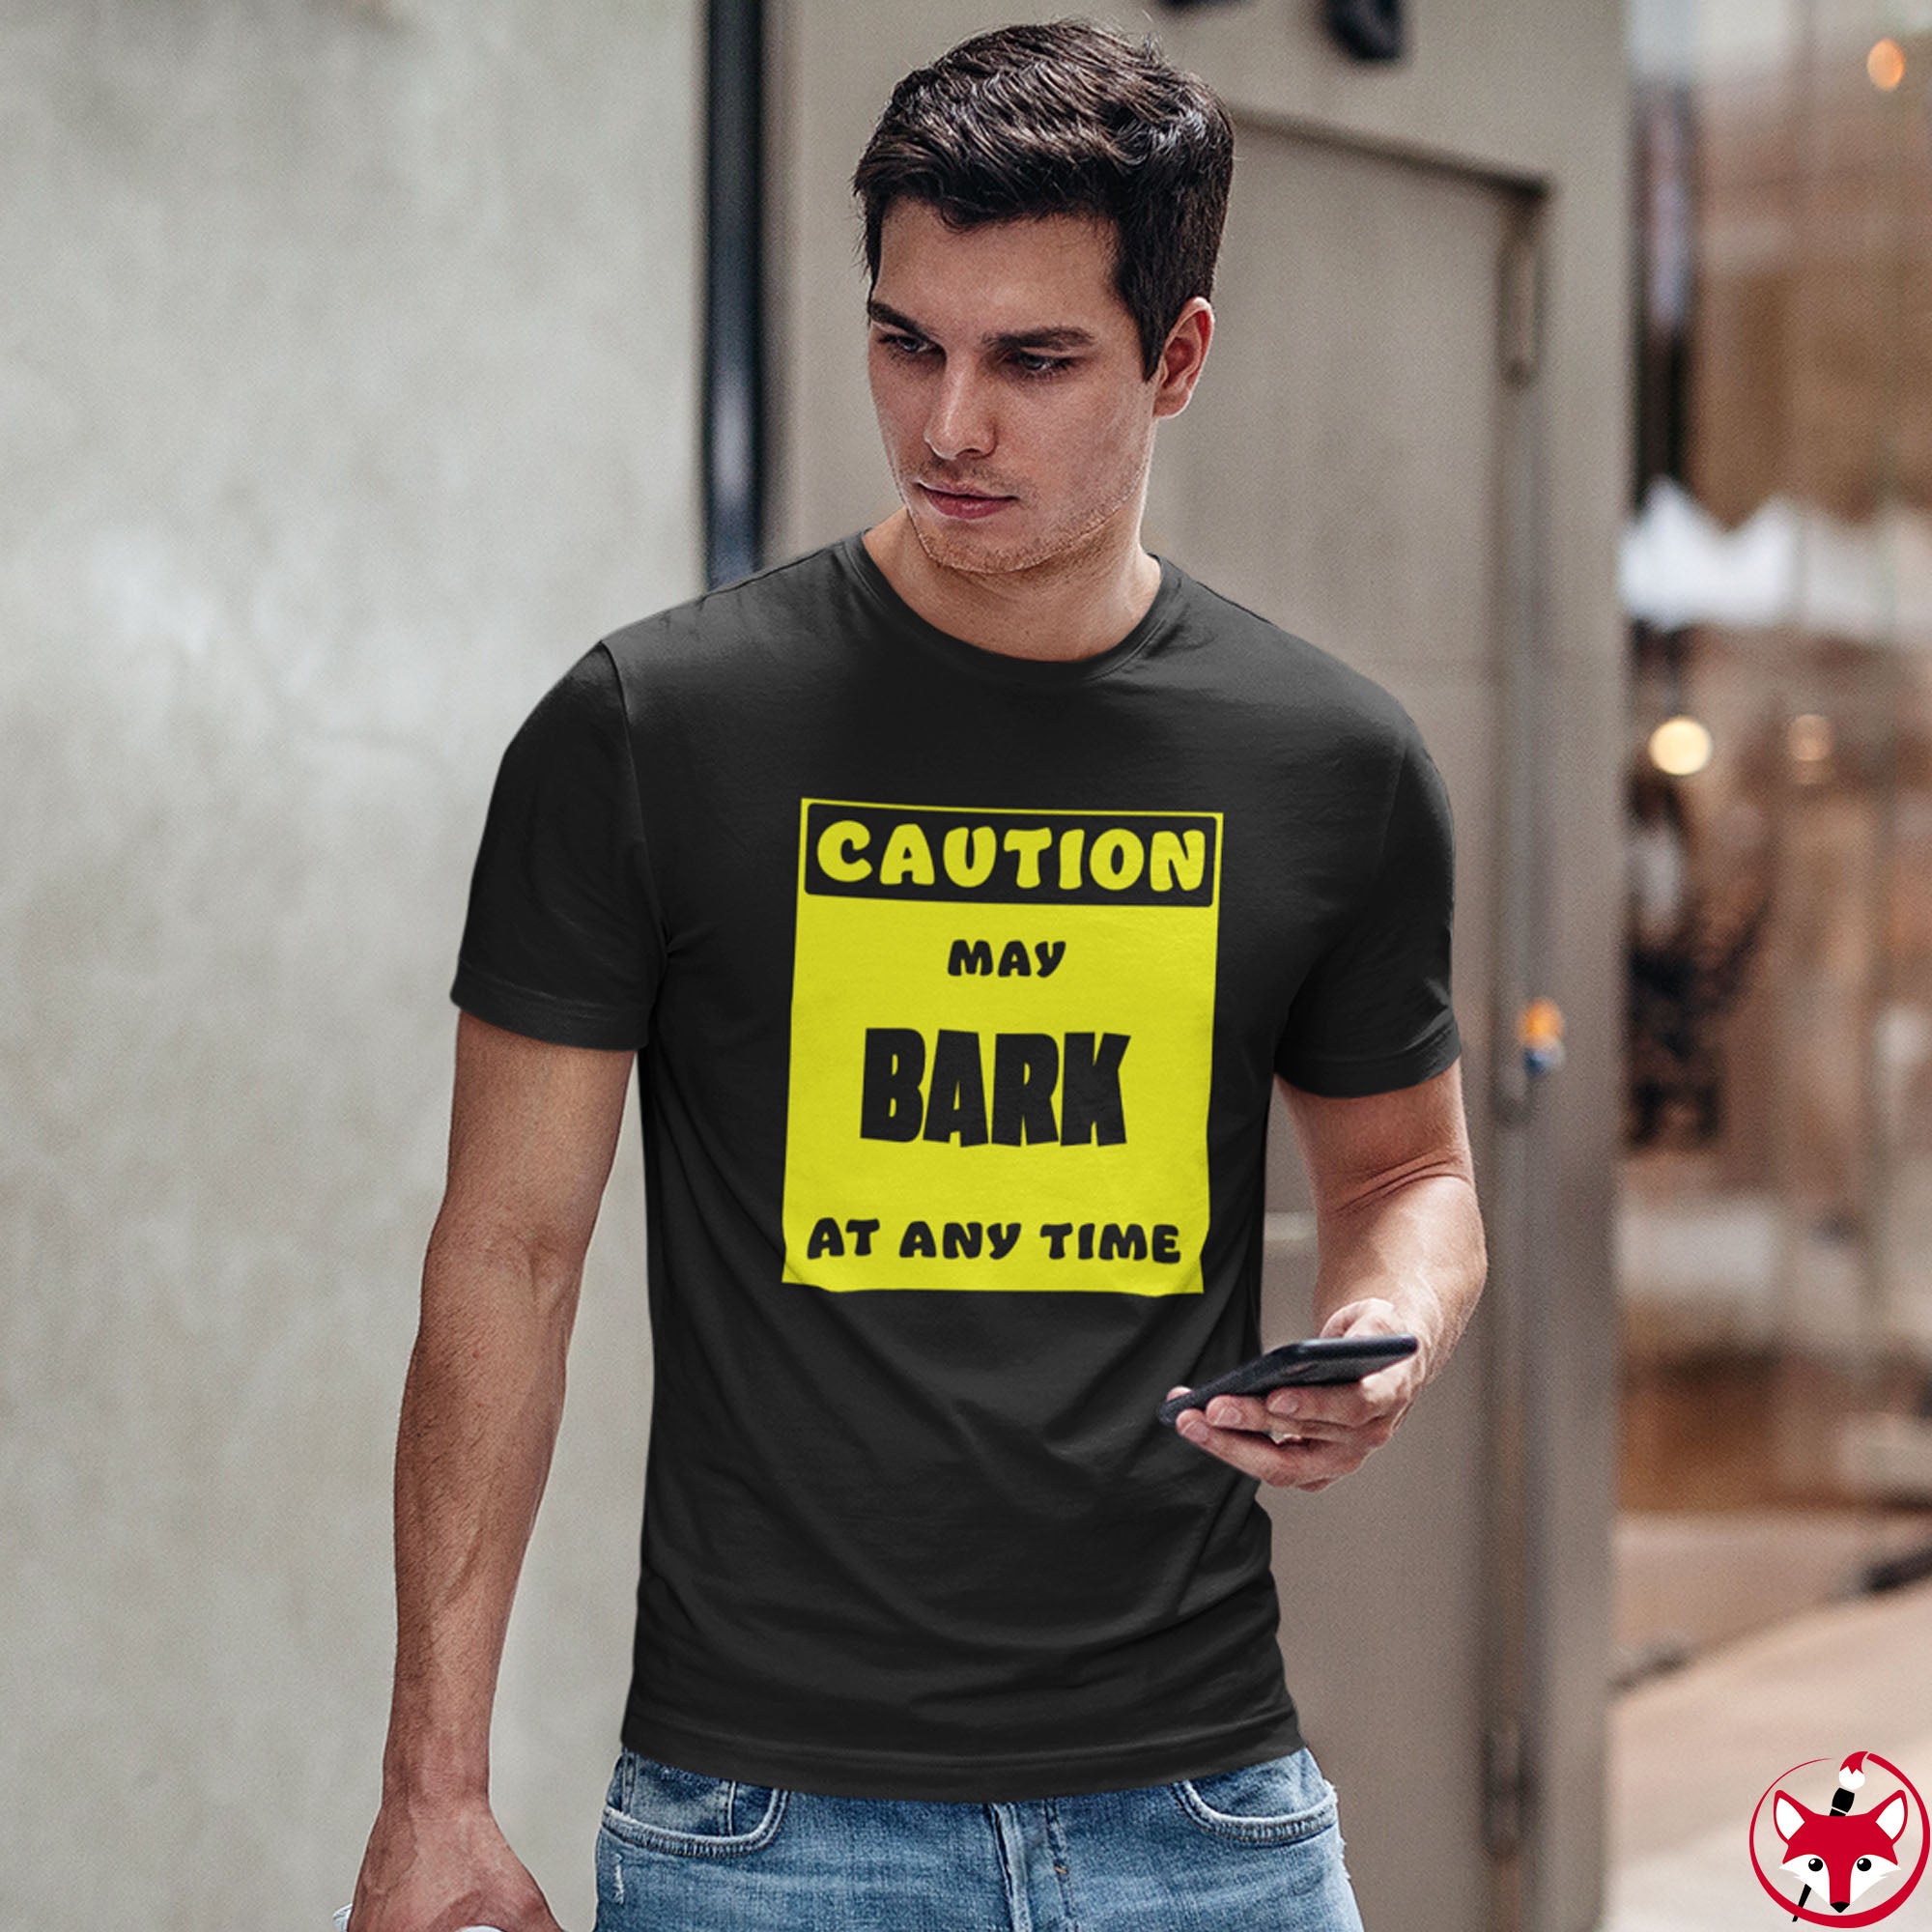 CAUTION! May BARK at any time! - T-Shirt T-Shirt AFLT-Whootorca 